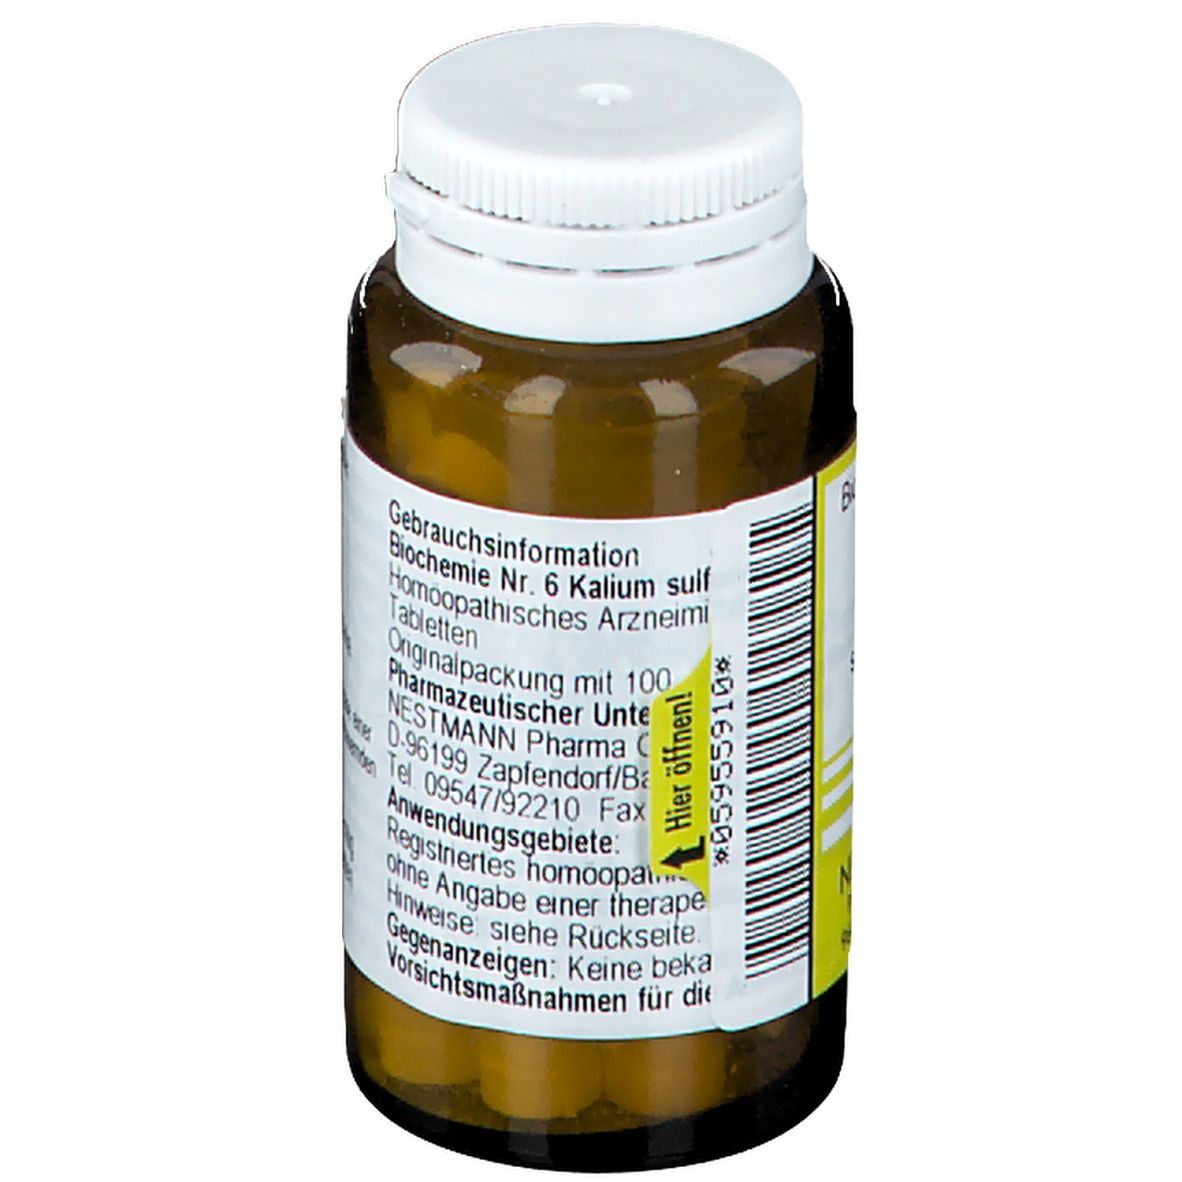 Biochemie 6 Kalium sulfuricum D6 Tabletten